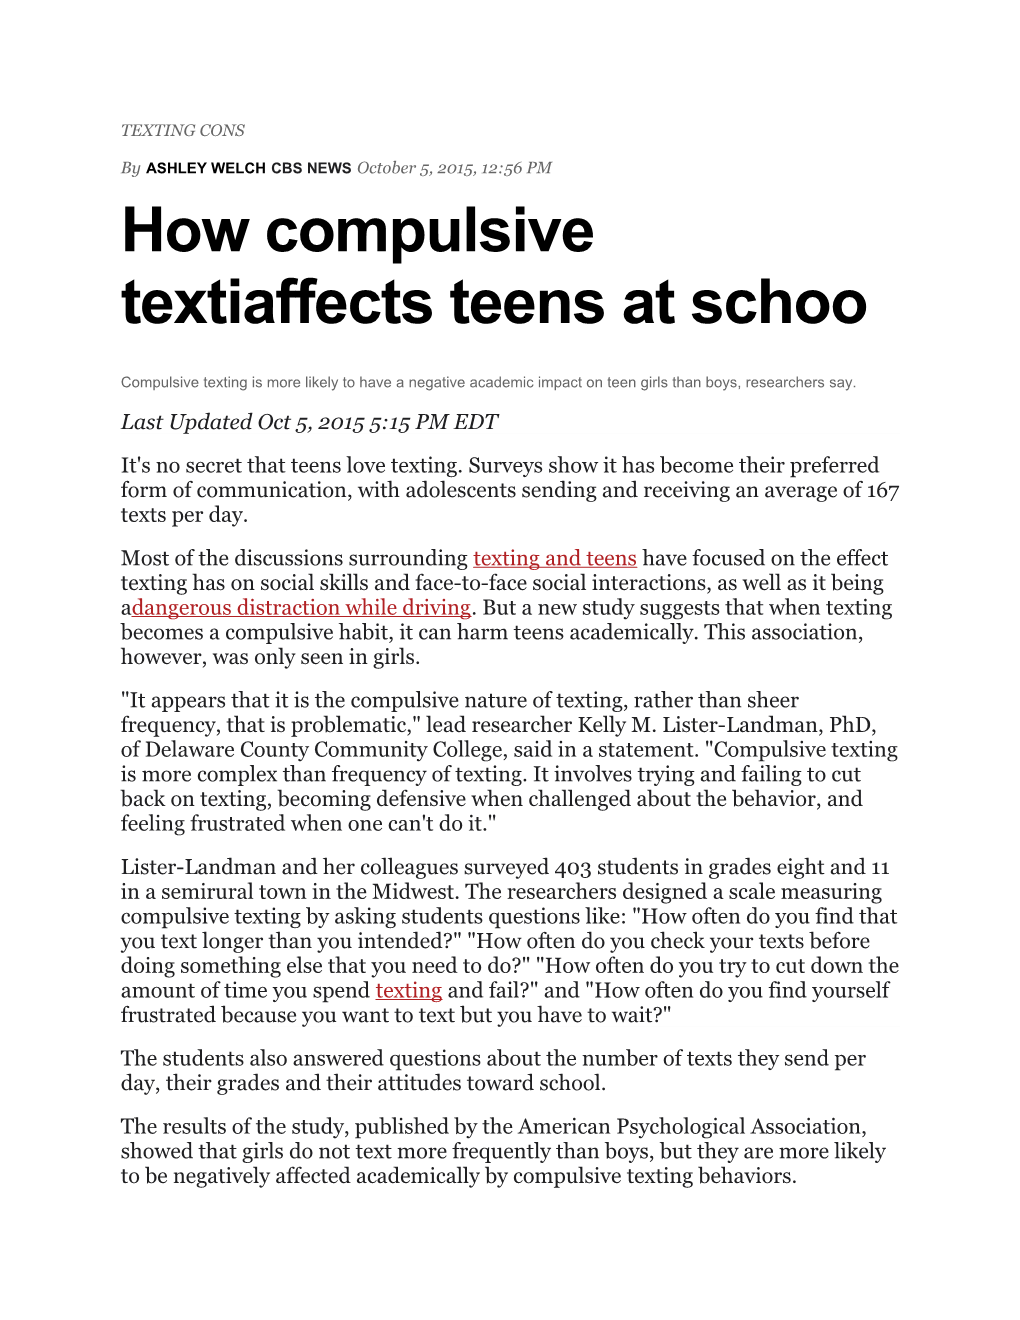 How Compulsivetextiaffects Teens at Schoo